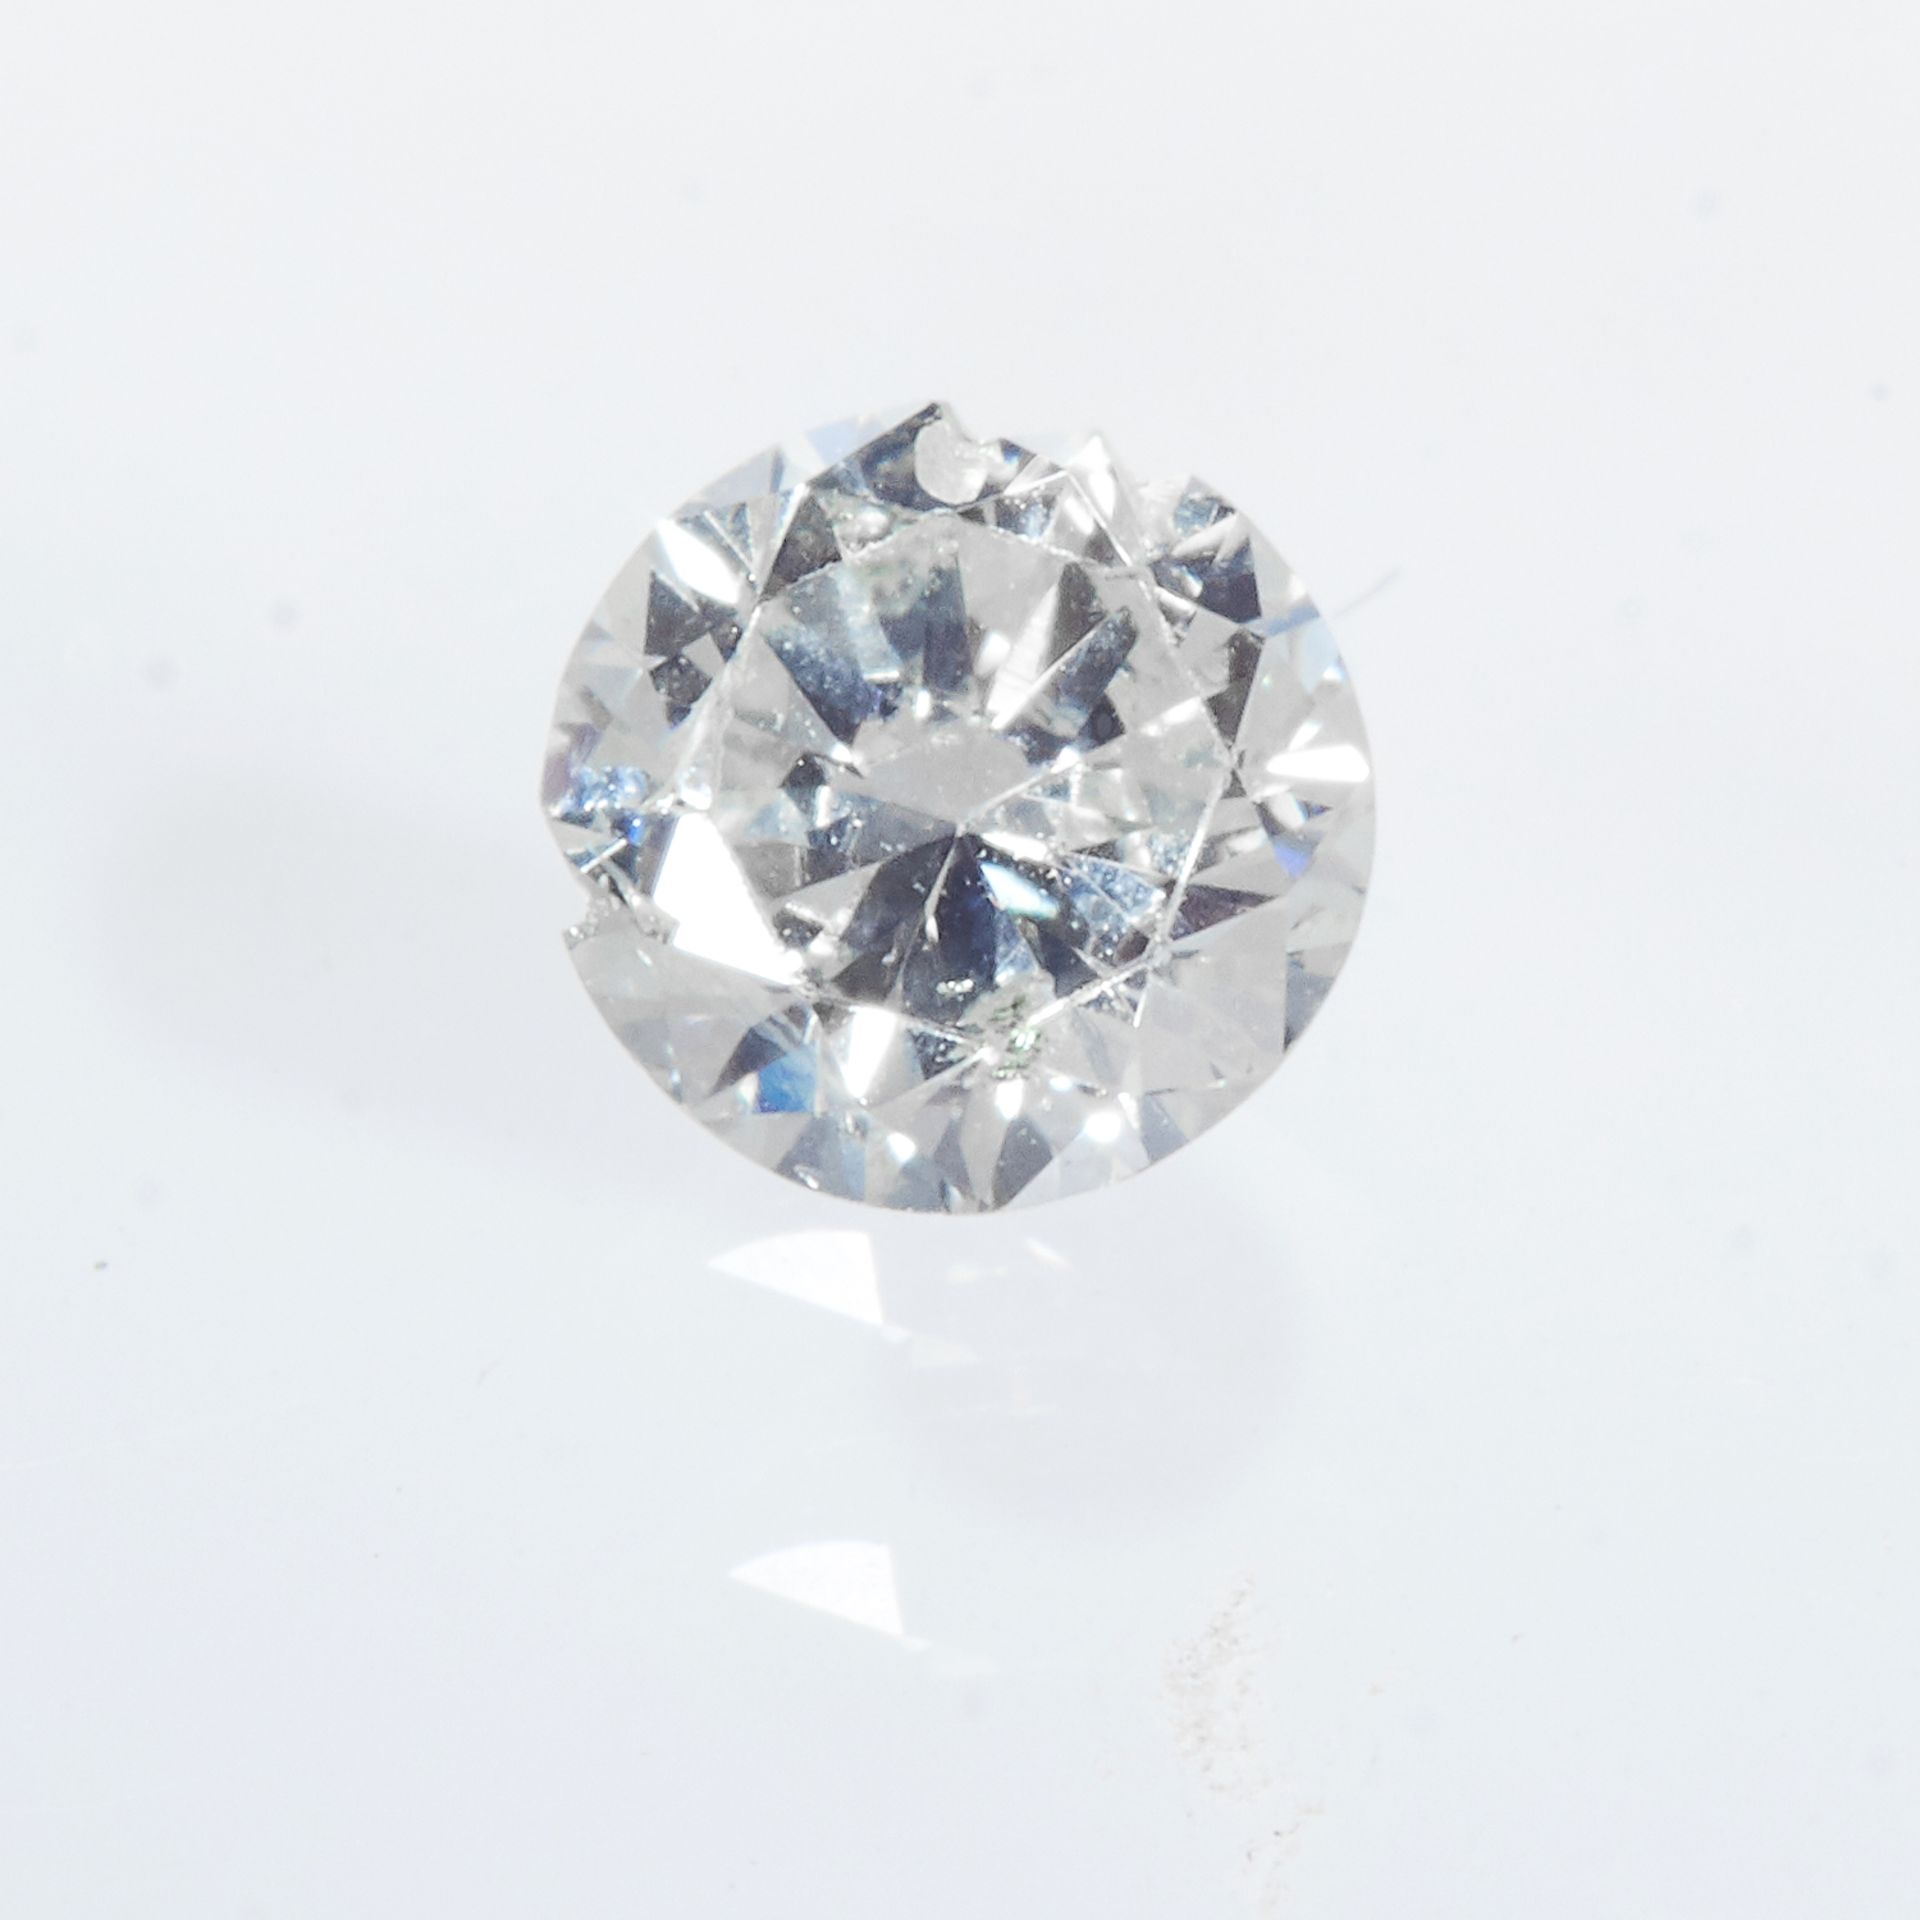 A 0.69 CARAT LOOSE DIAMOND round brilliant cut, approximately 0.69 carats.